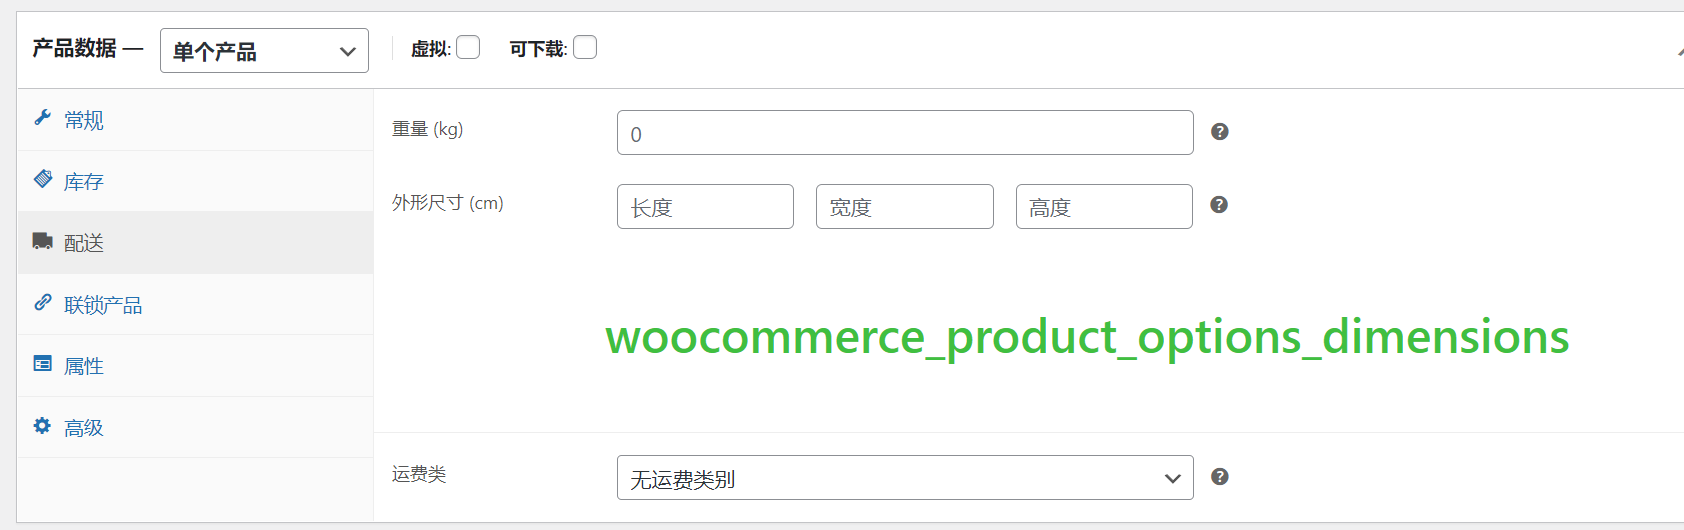 woocommerce_product_options_dimensions